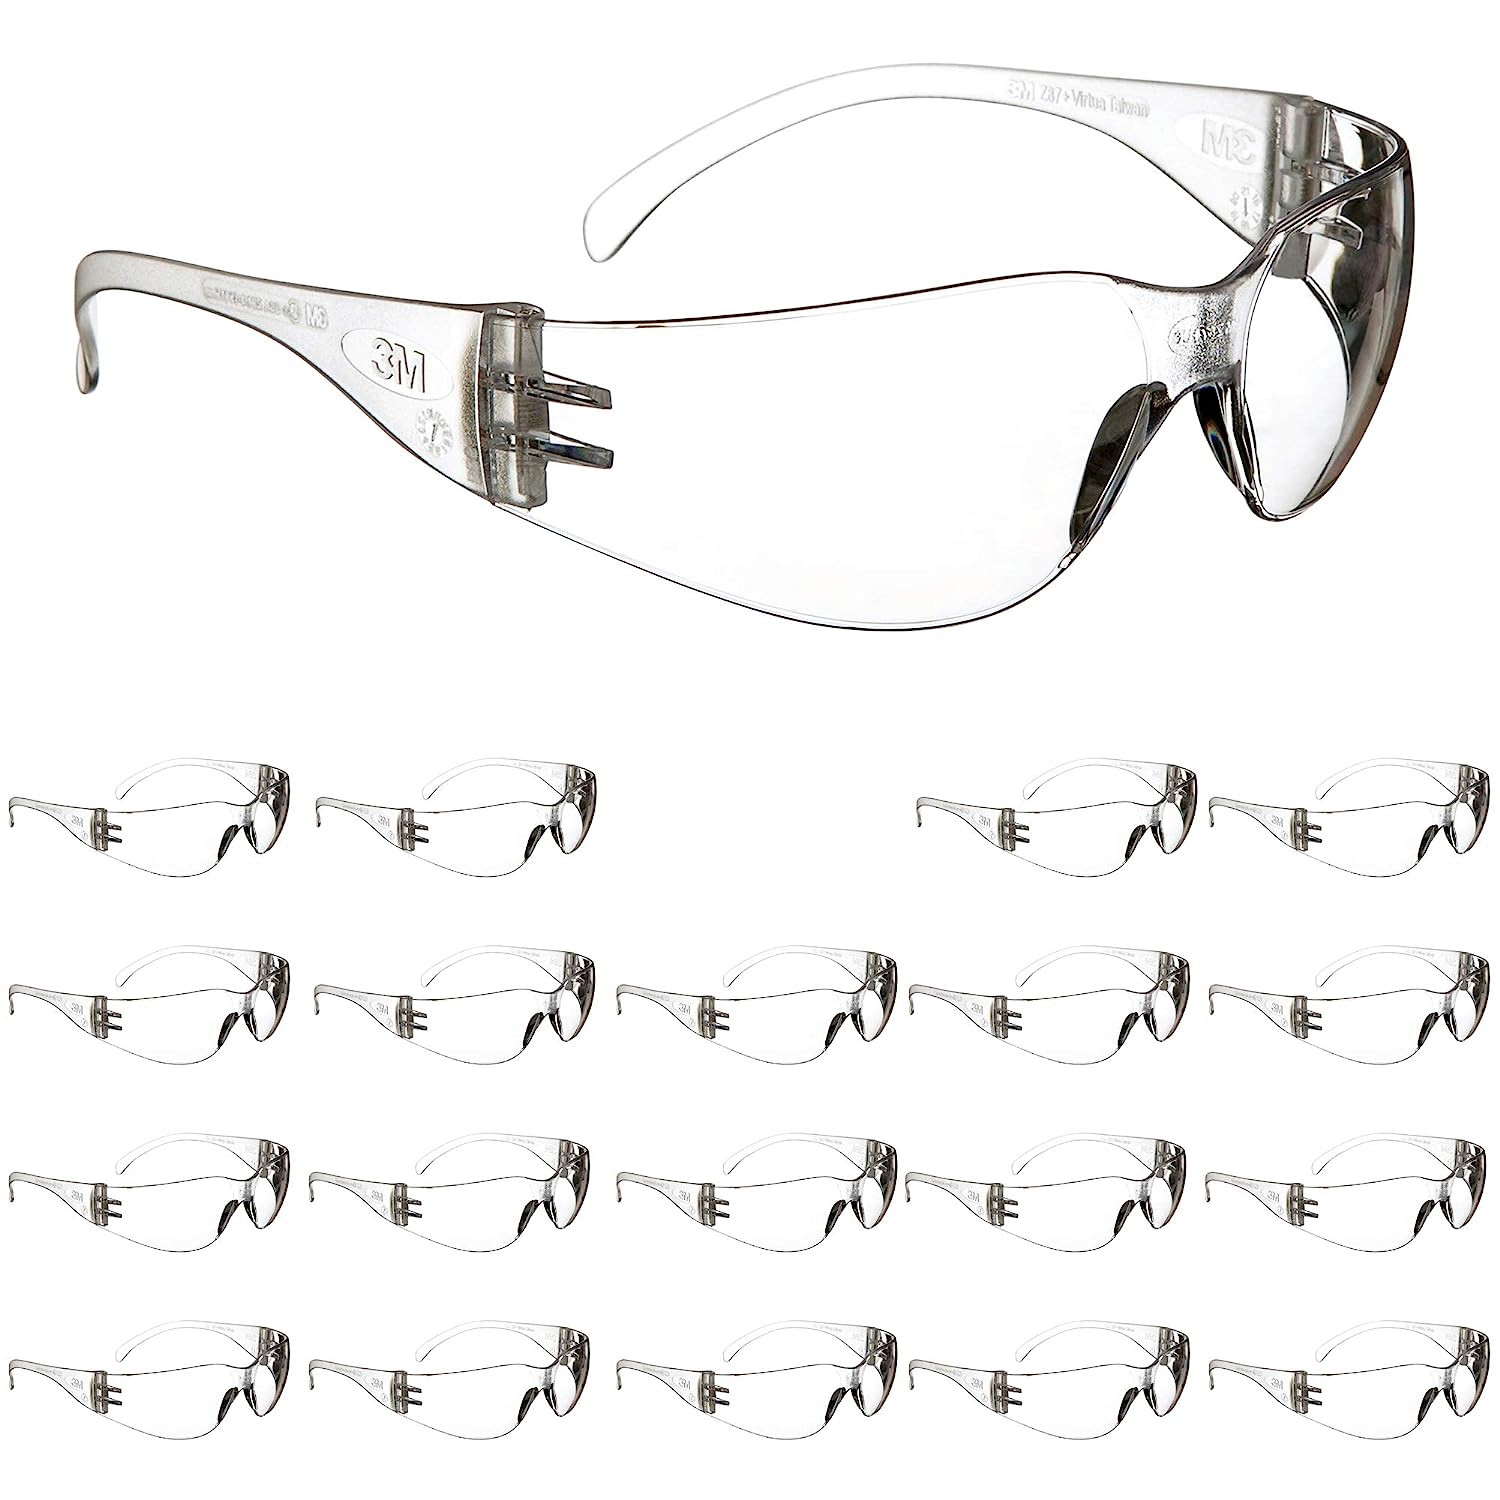 3M Safety Glasses, Virtua, 20 Pair, ANSI Z87, Anti-Fog [...]